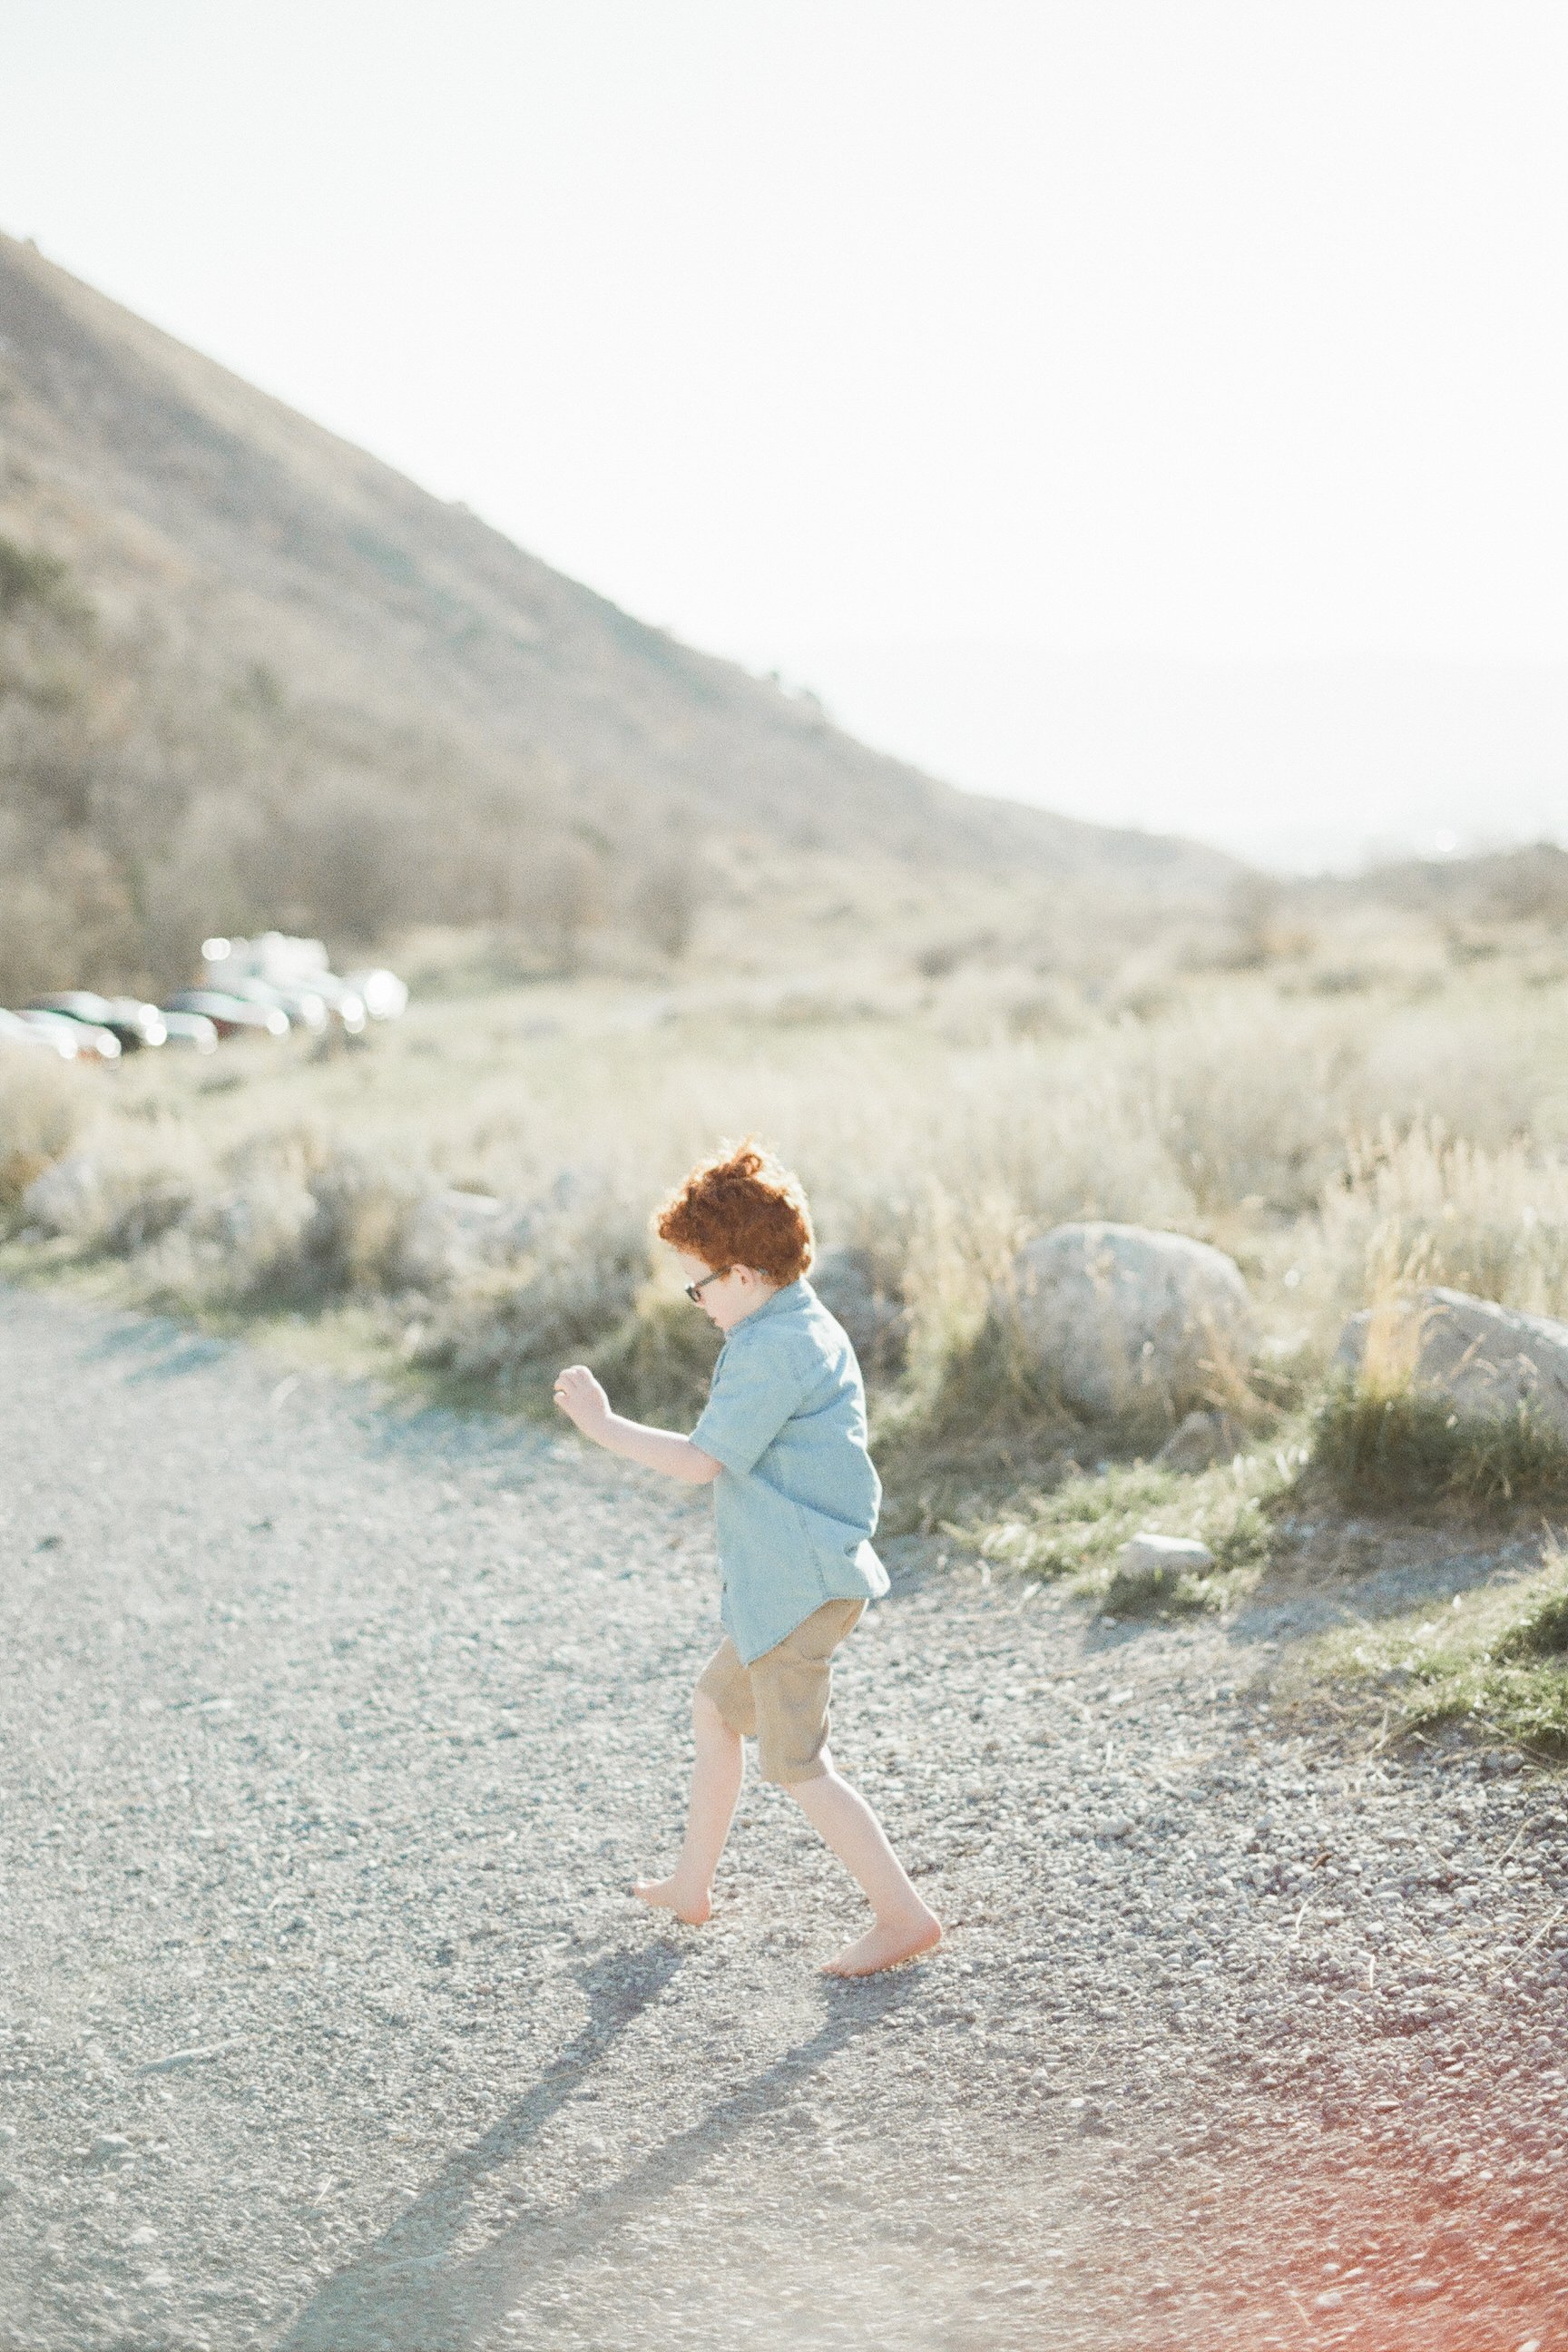 boy walking on dirt road barefoot